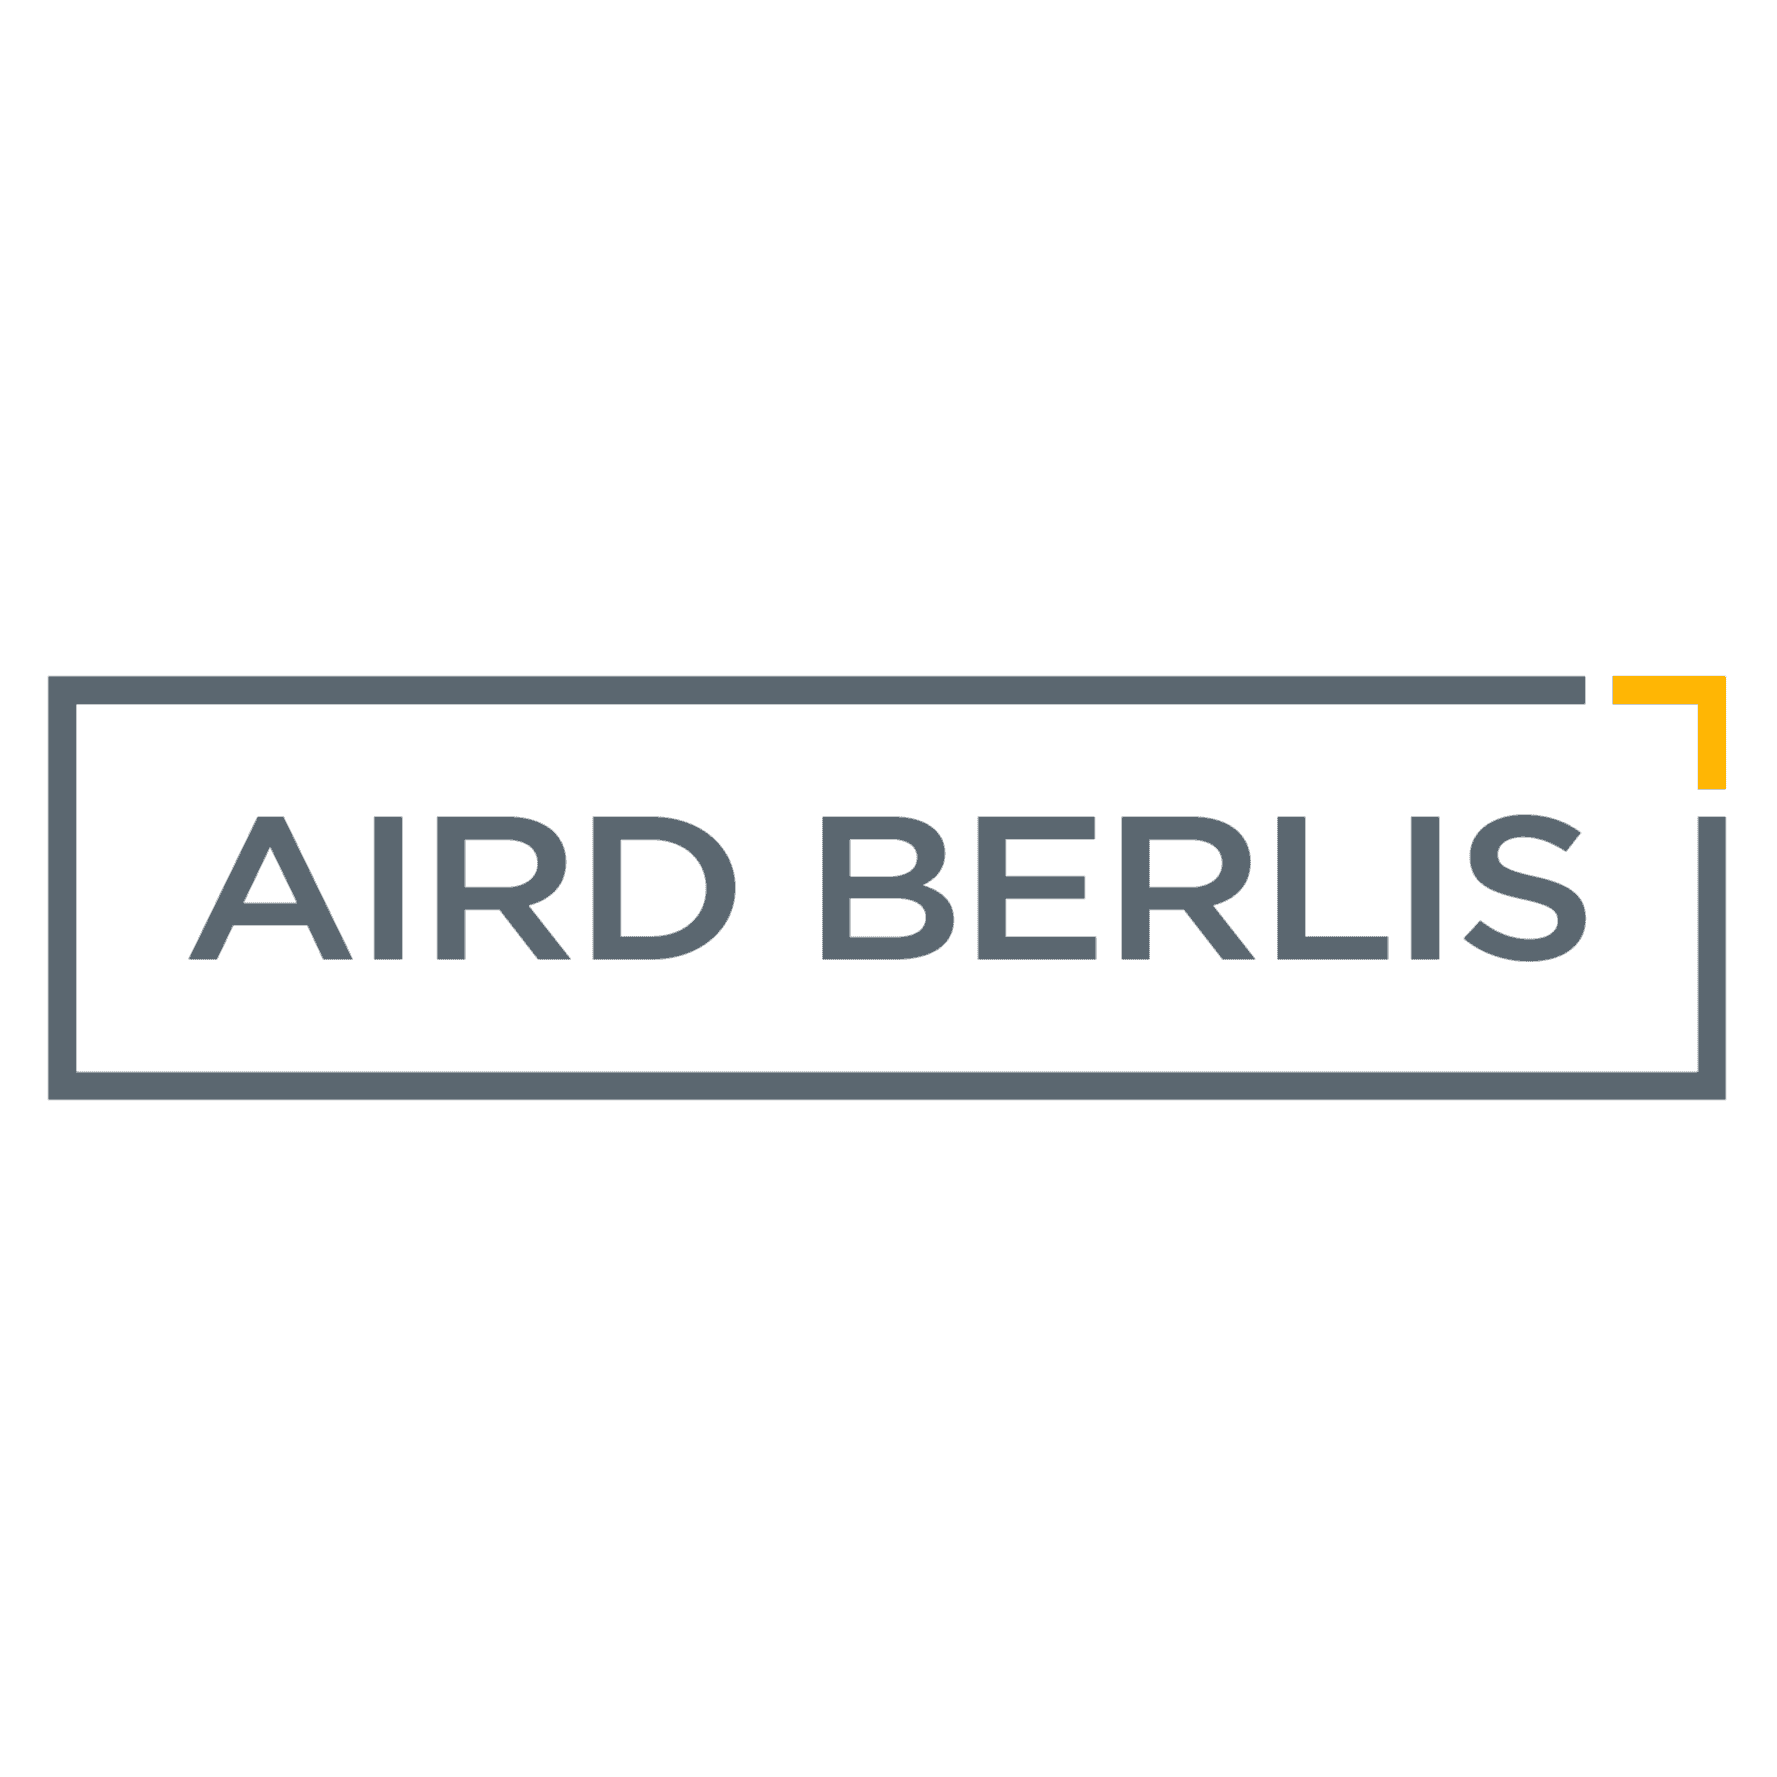 Aird & Berlis LLP logo